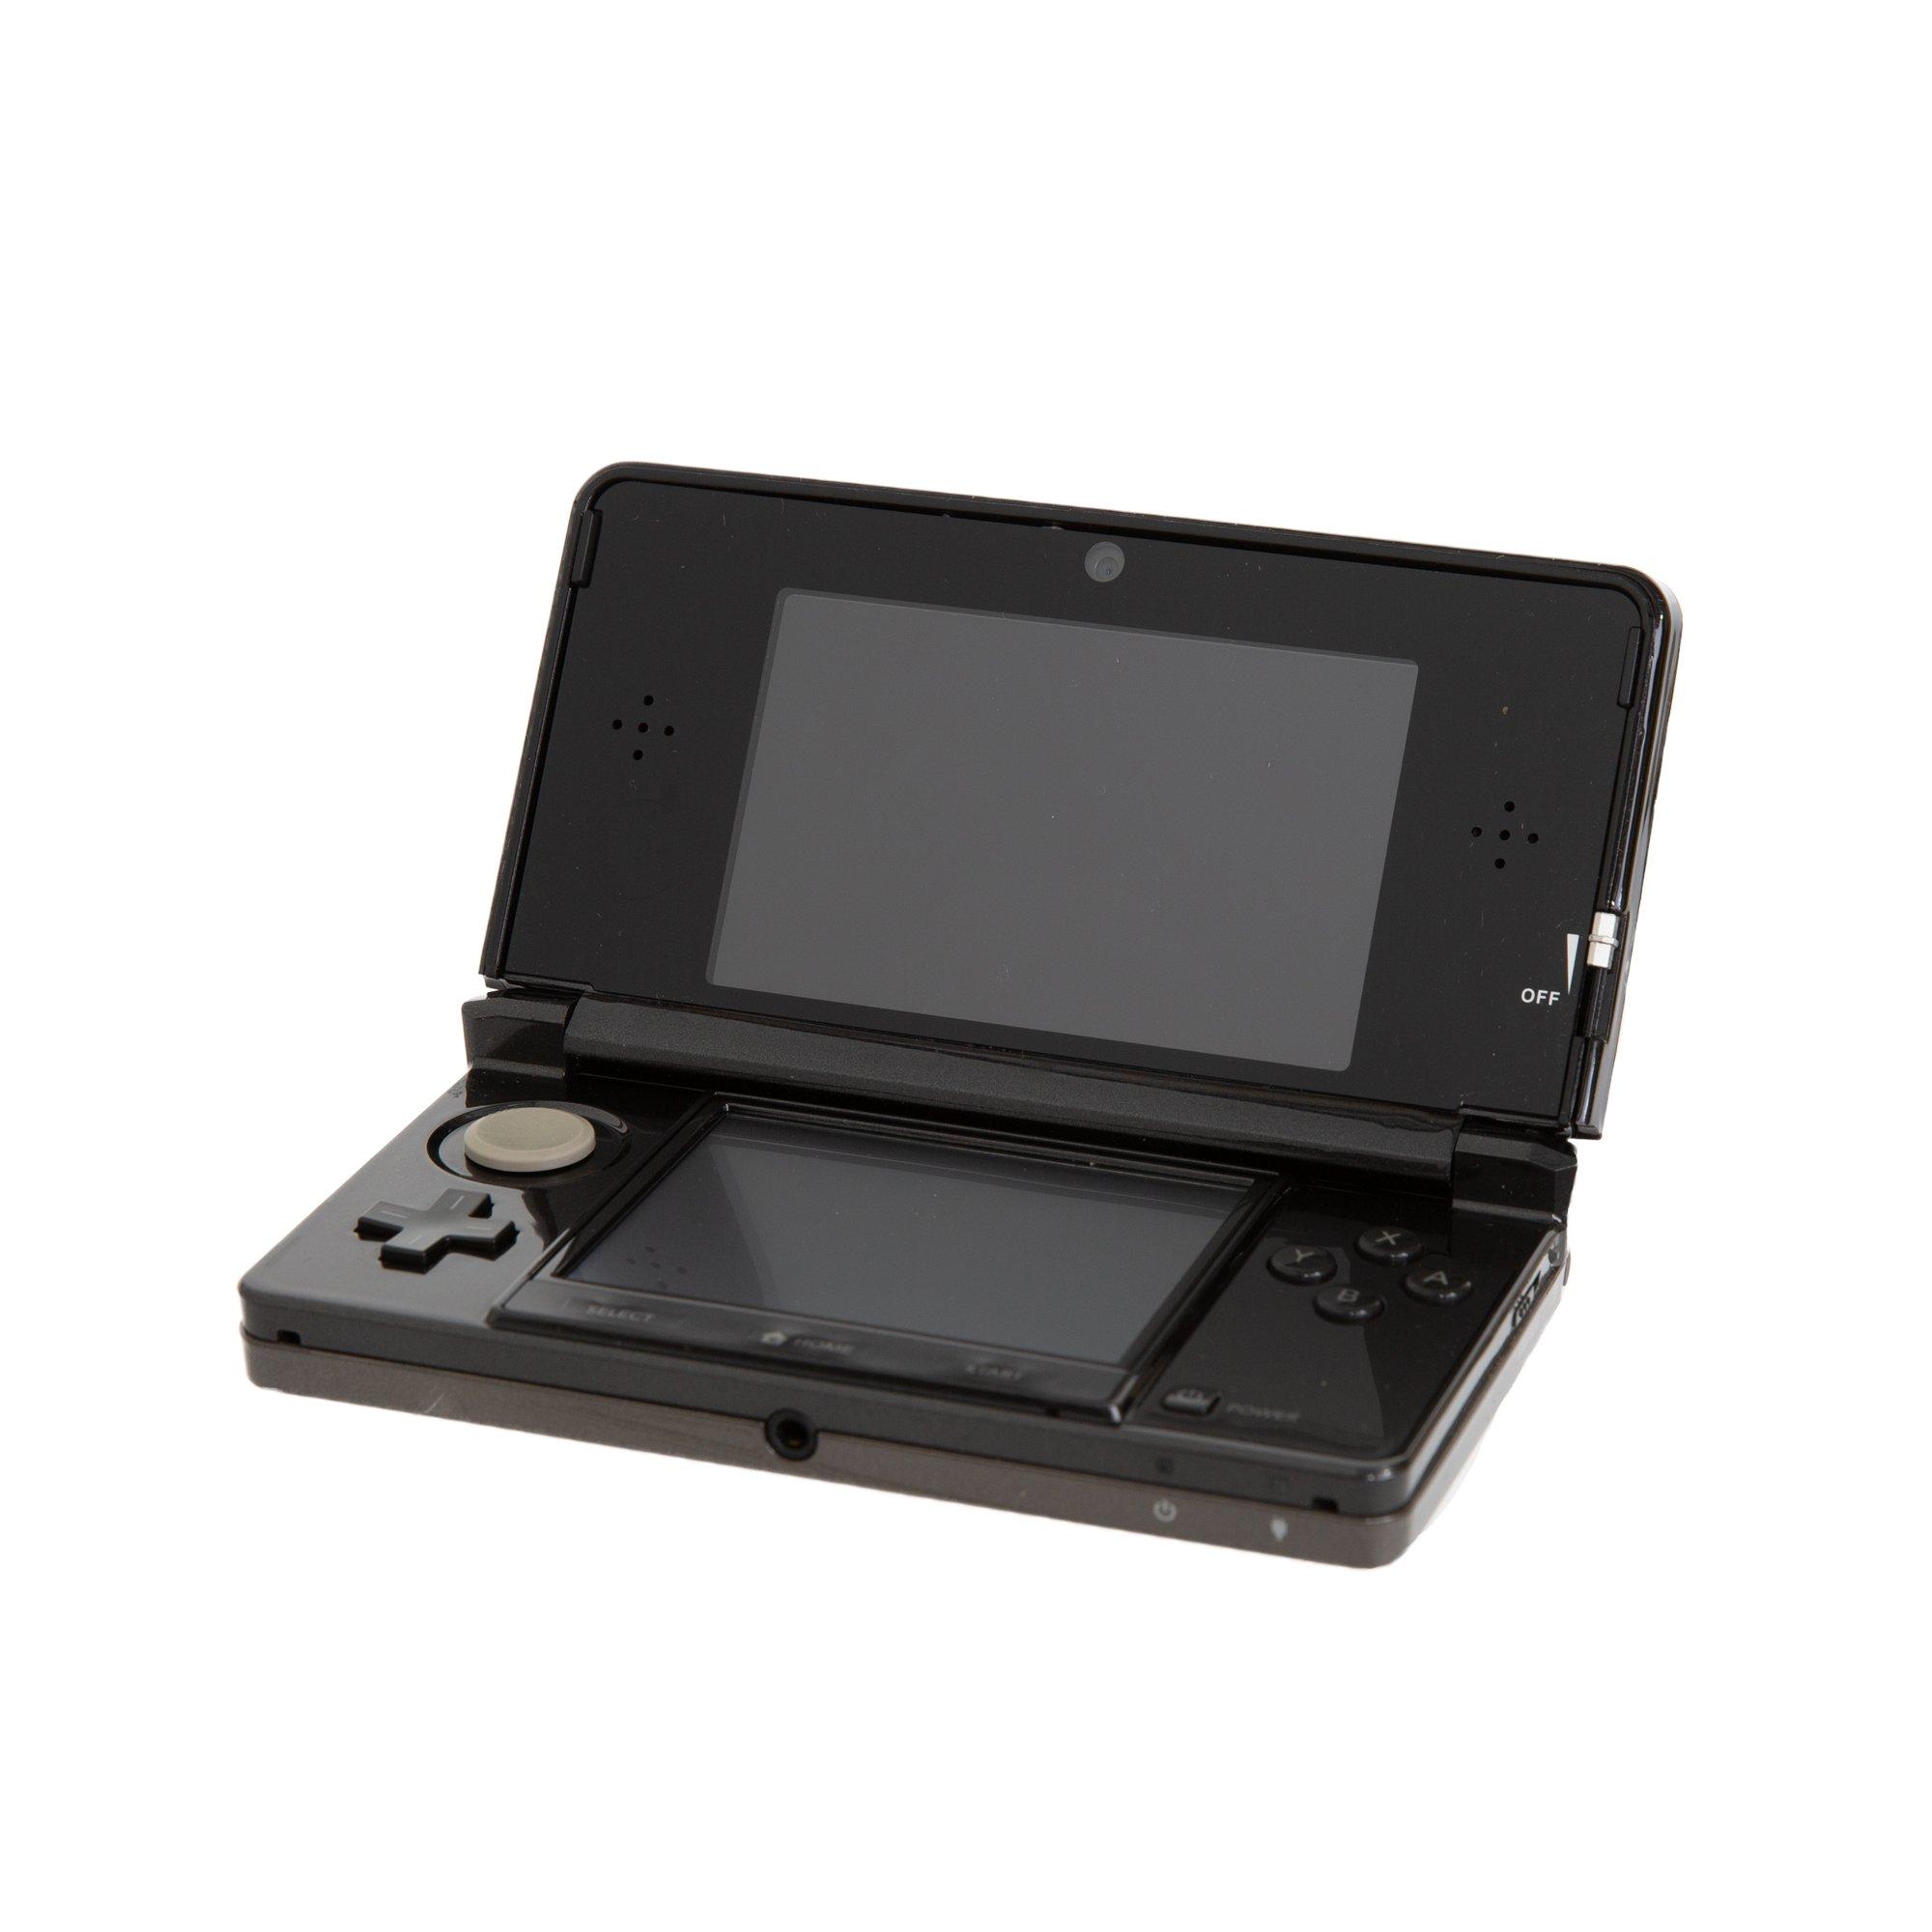 list item 1 of 4 Nintendo 3DS Cosmo Black GameStop Premium Refurbished